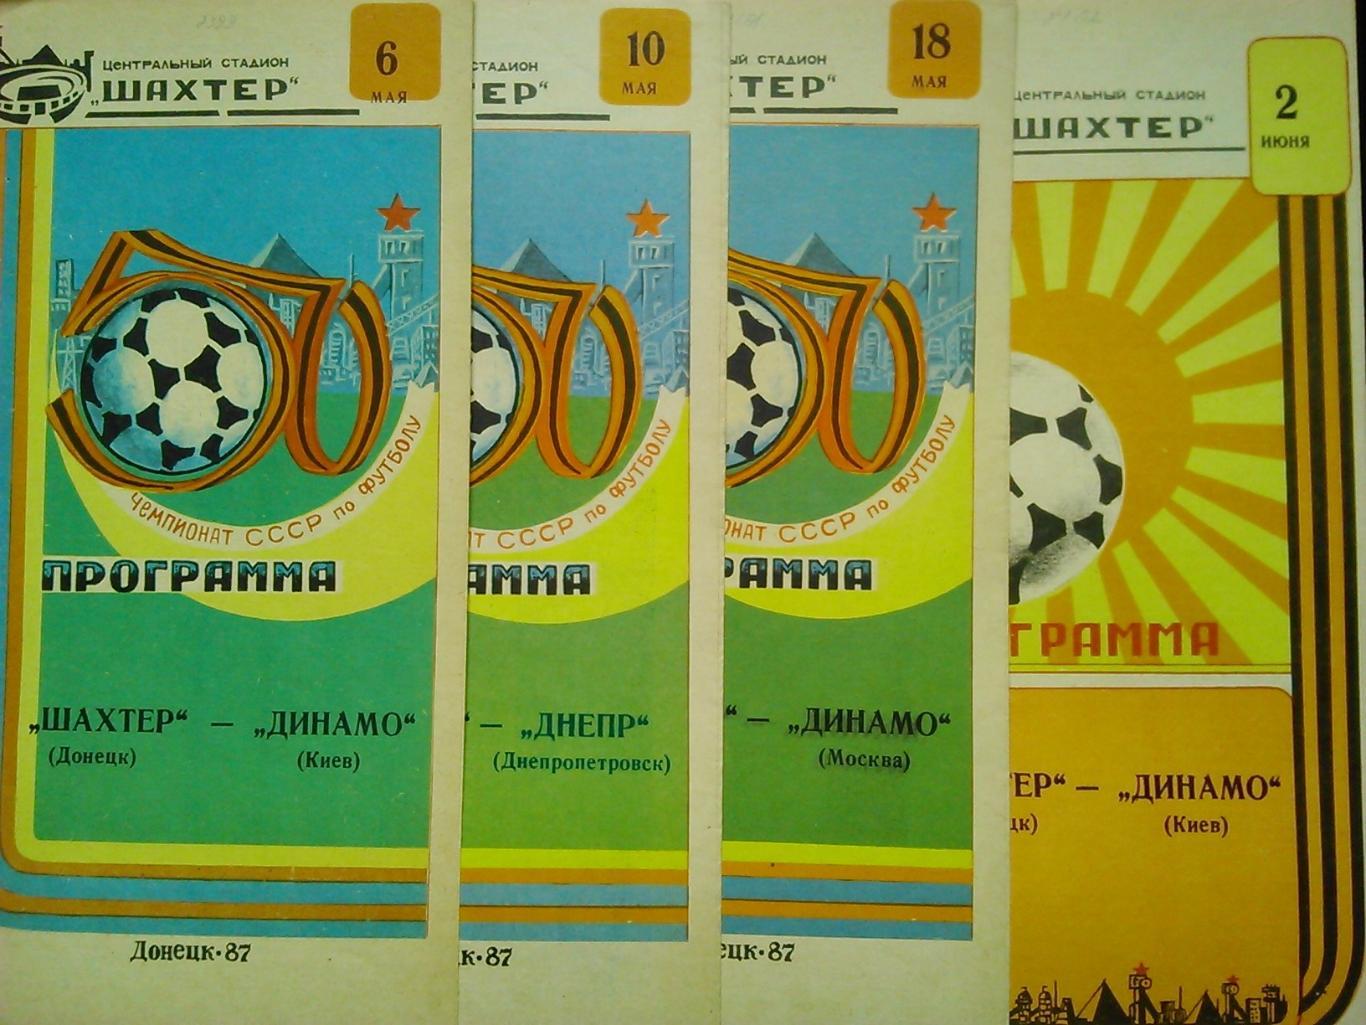 ШАХТЕР Донецк - ДИНАМО Киев 6.05.1987. Оптом скидки до 45%!